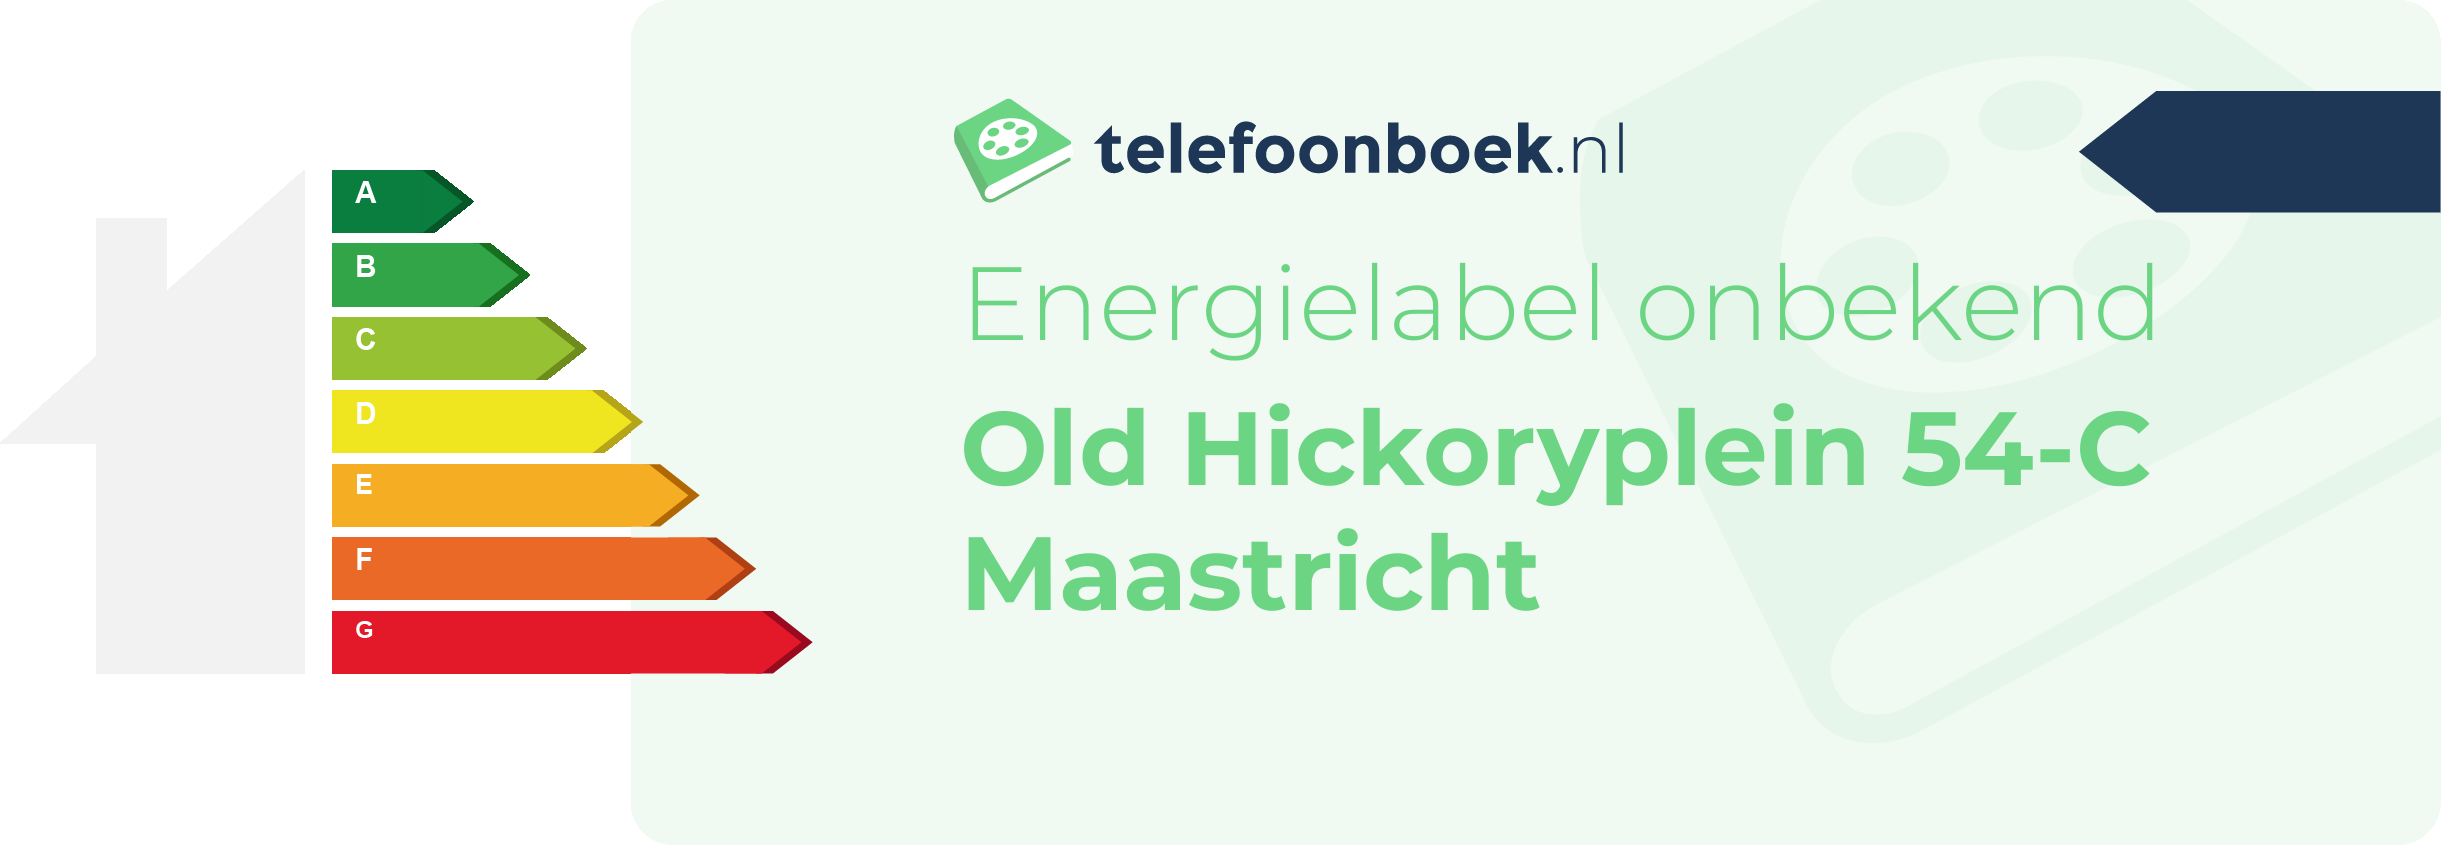 Energielabel Old Hickoryplein 54-C Maastricht